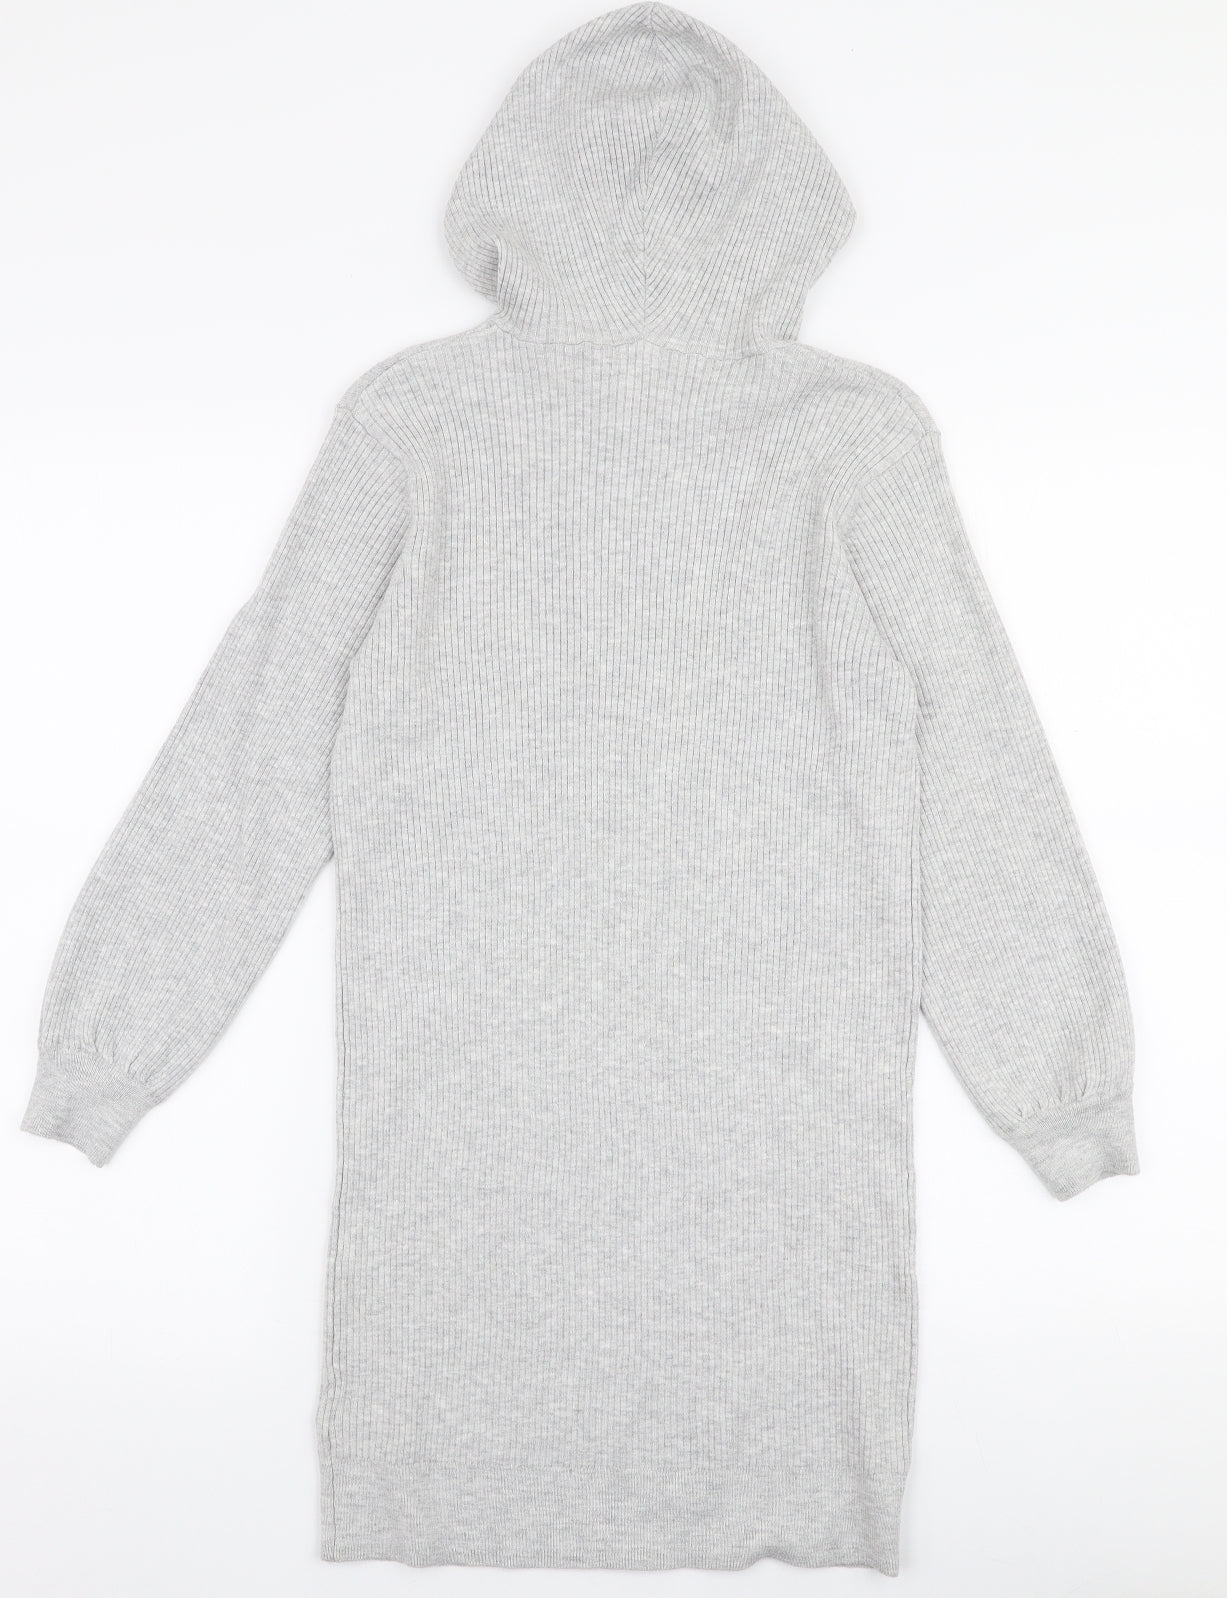 NEXT Girls Grey  Polyester Jumper Dress  Size 9 Years  V-Neck Pullover